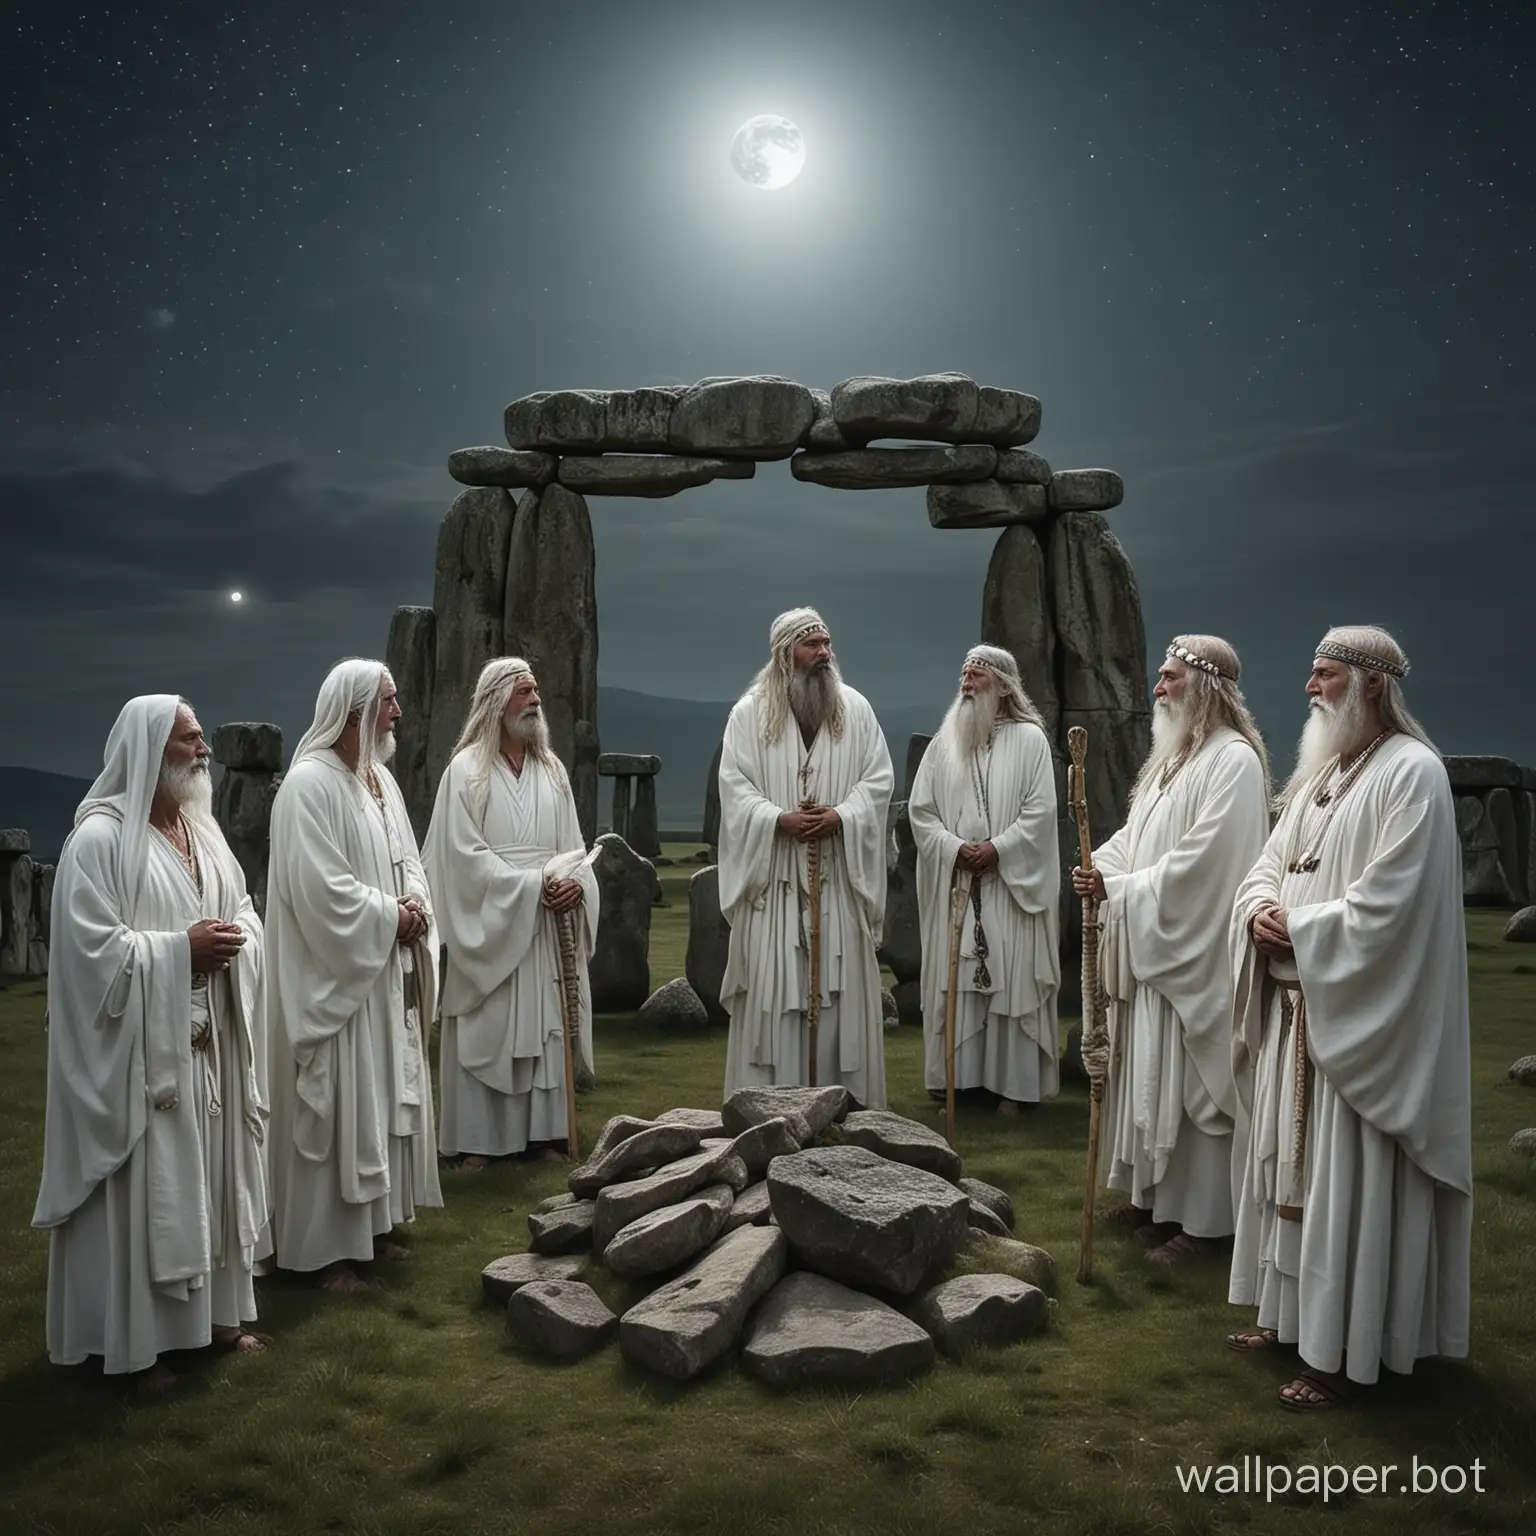 Ancient-Druids-Ceremony-at-Stonehenge-Under-Full-Moon